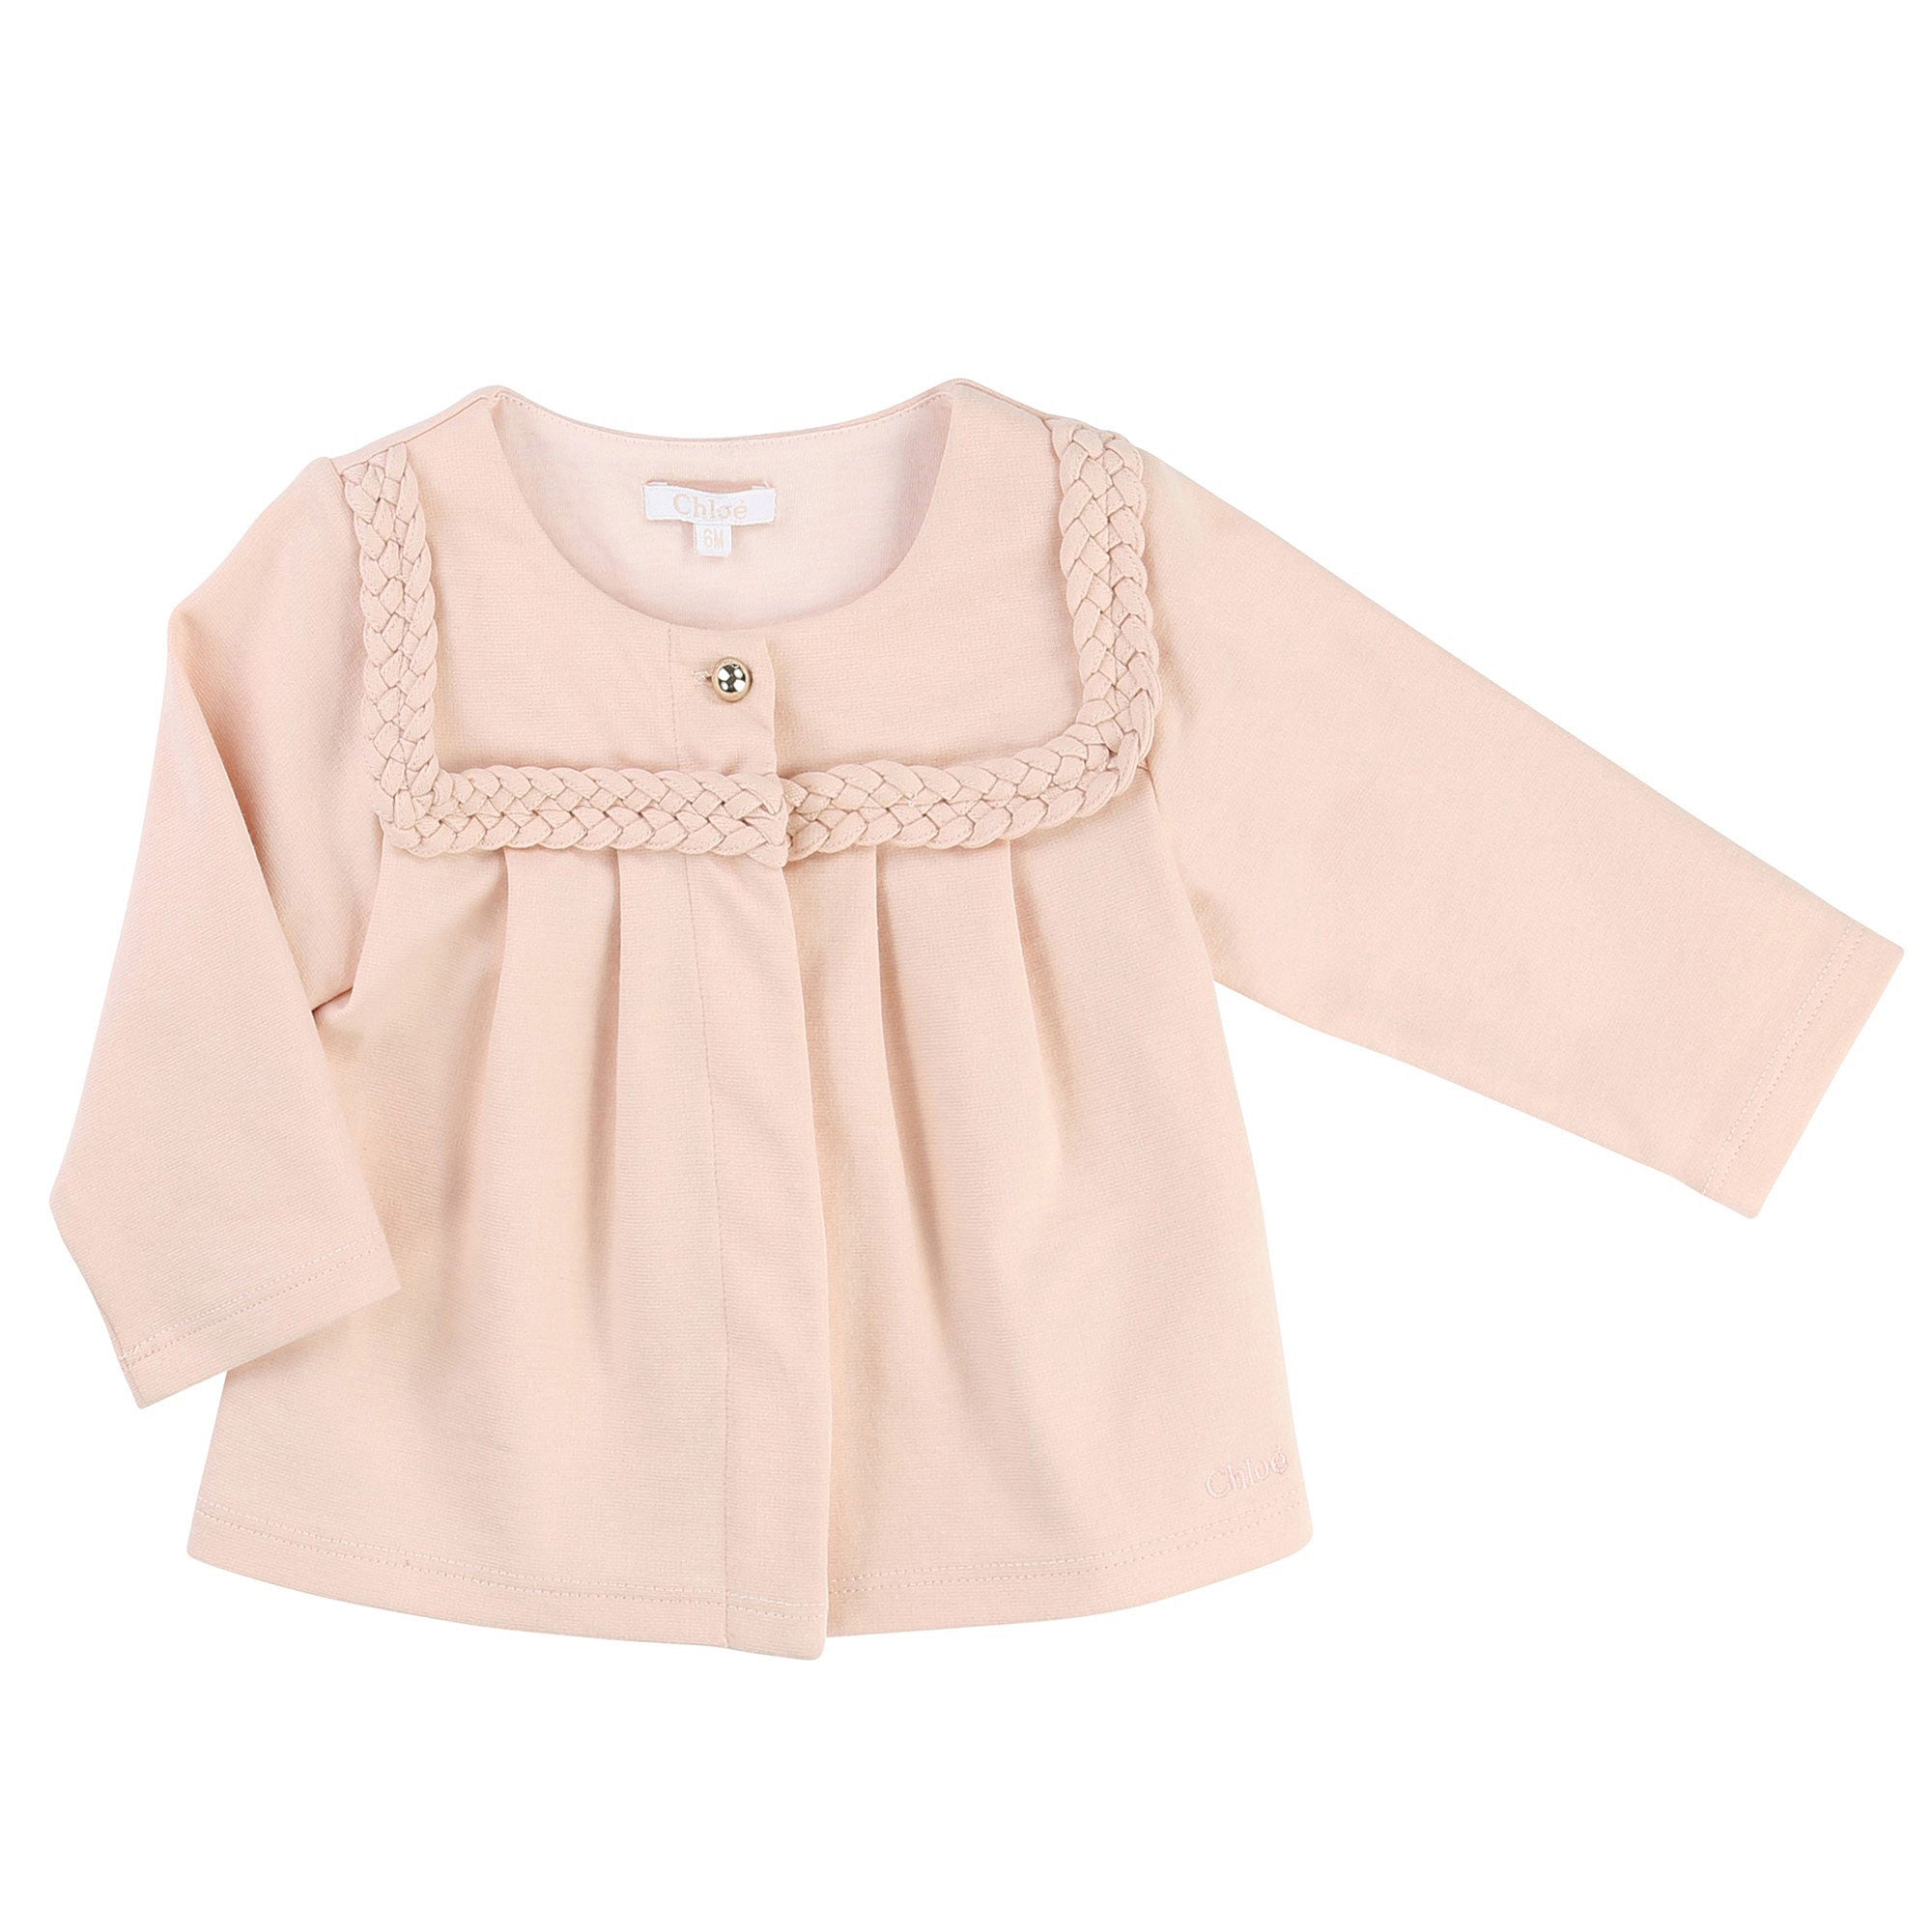 Baby Girls Pale Pink Lace Trims Cotton Cardigan - CÉMAROSE | Children's Fashion Store - 1